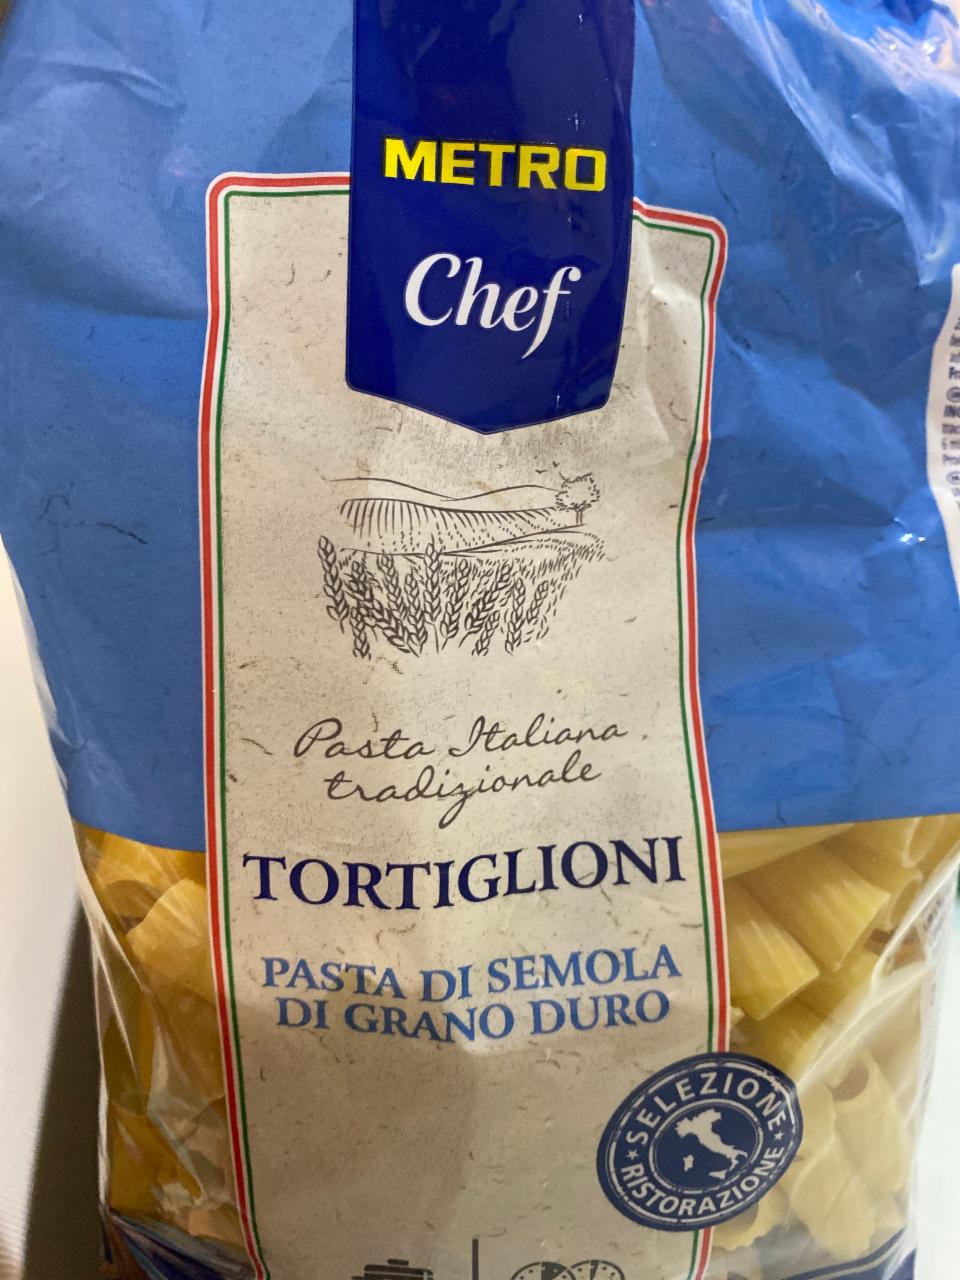 Фото - Макарони з твердих сортів пшениці Tortiglioni Metro Chef